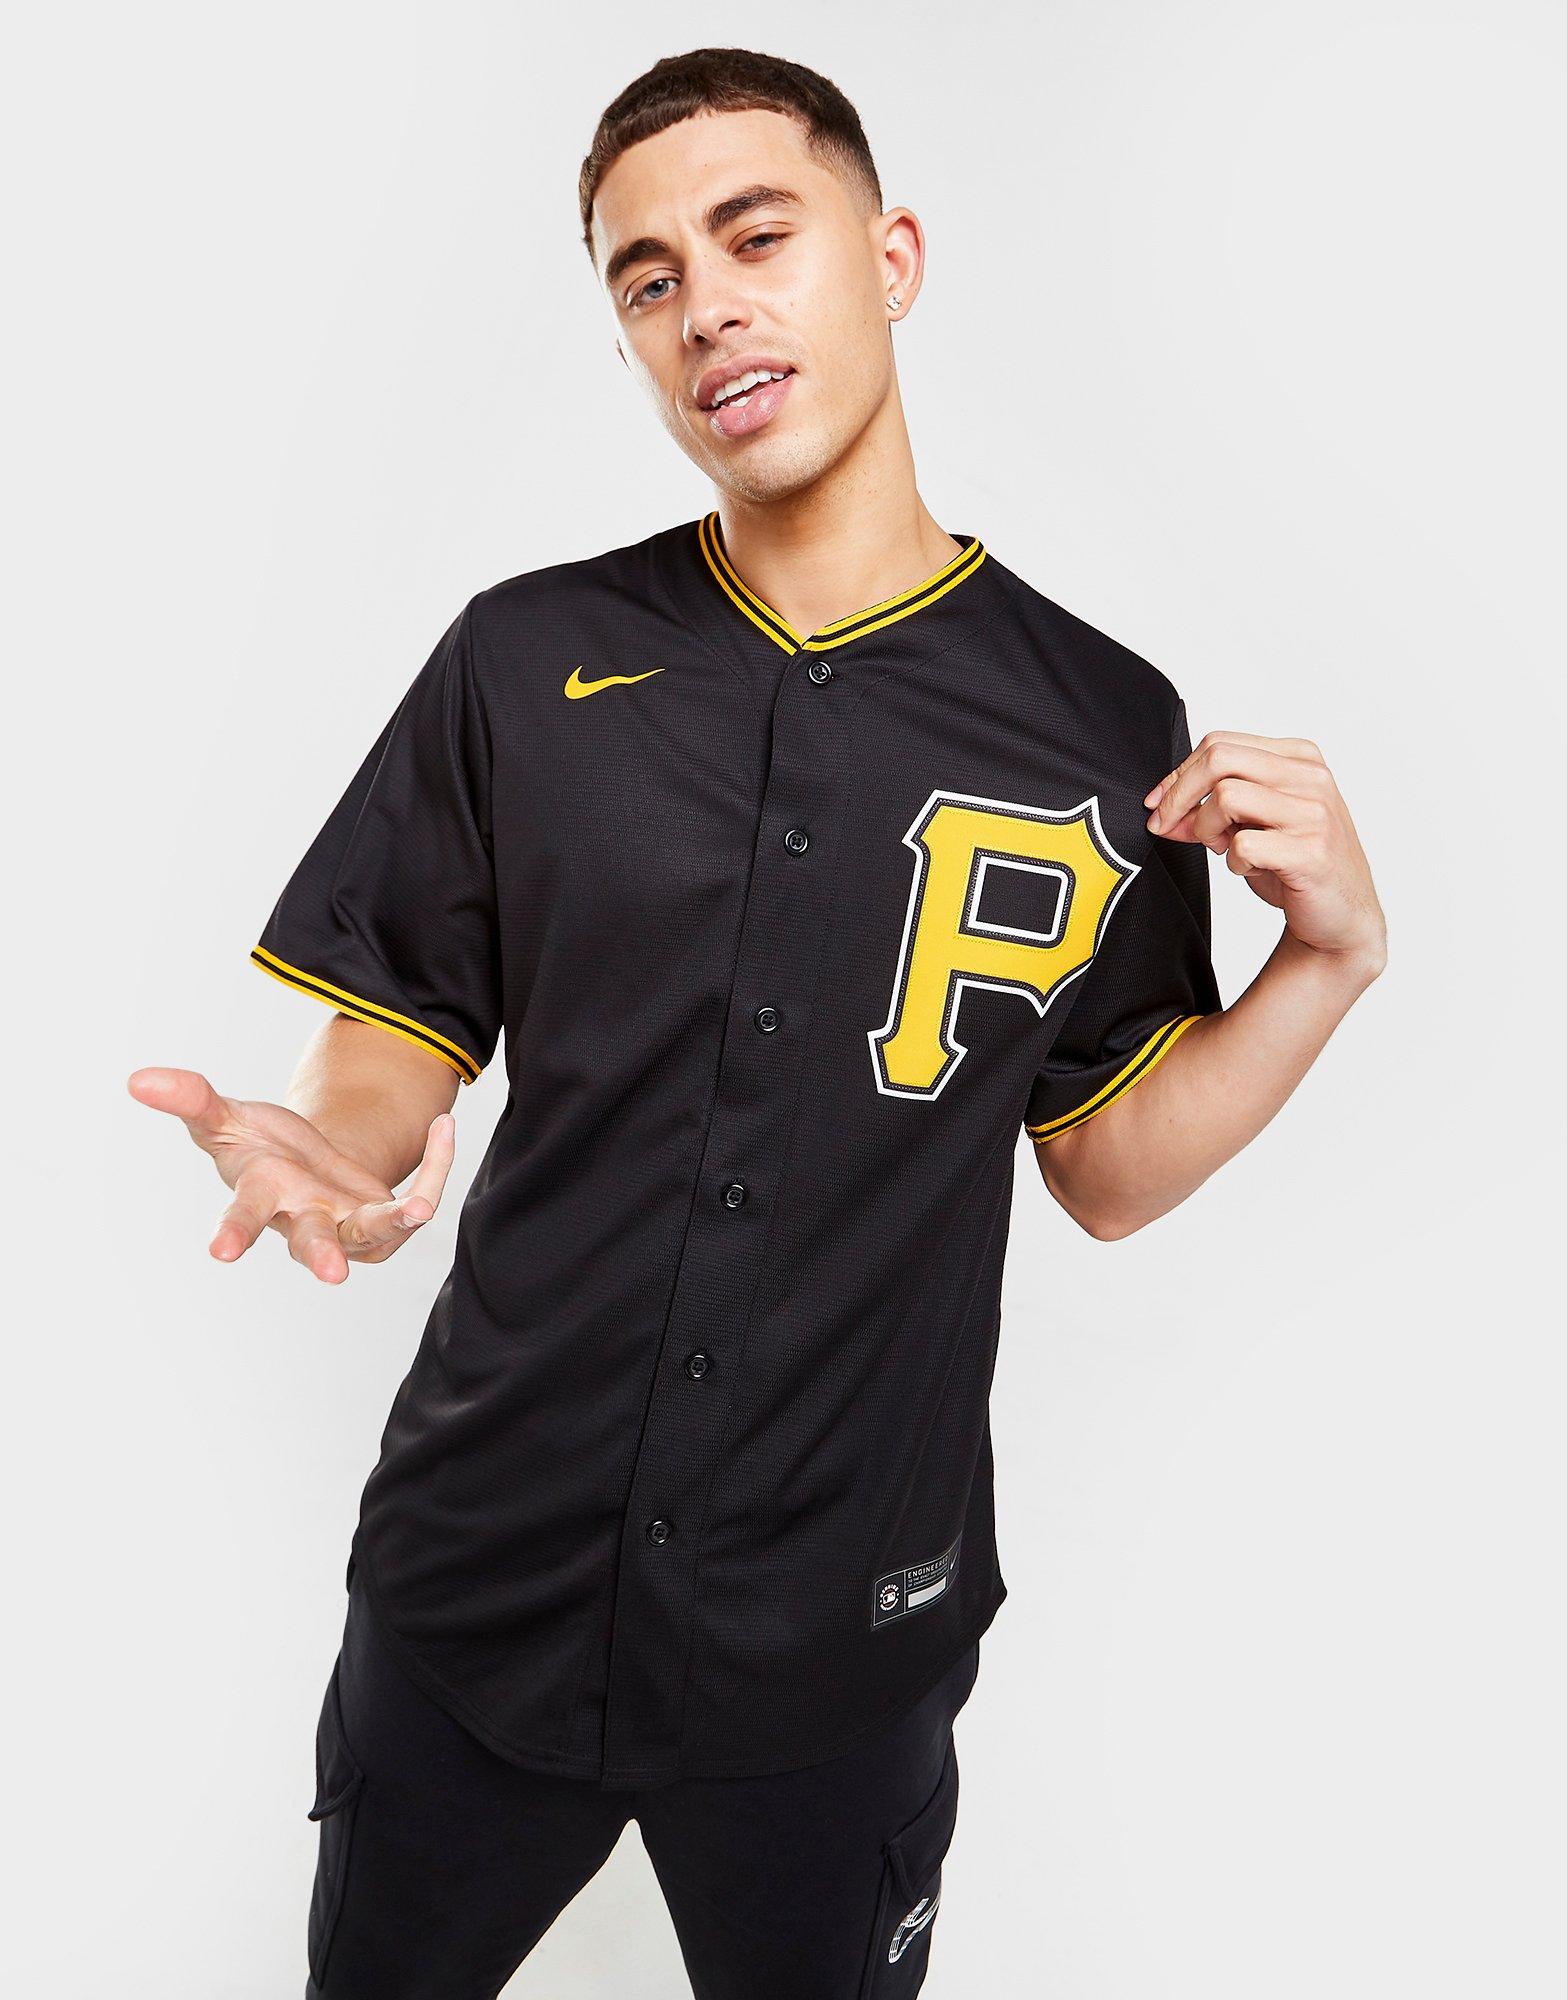 Pittsburgh Pirates Alternate Uniform  Pittsburgh pirates, Pirates,  Pittsburgh